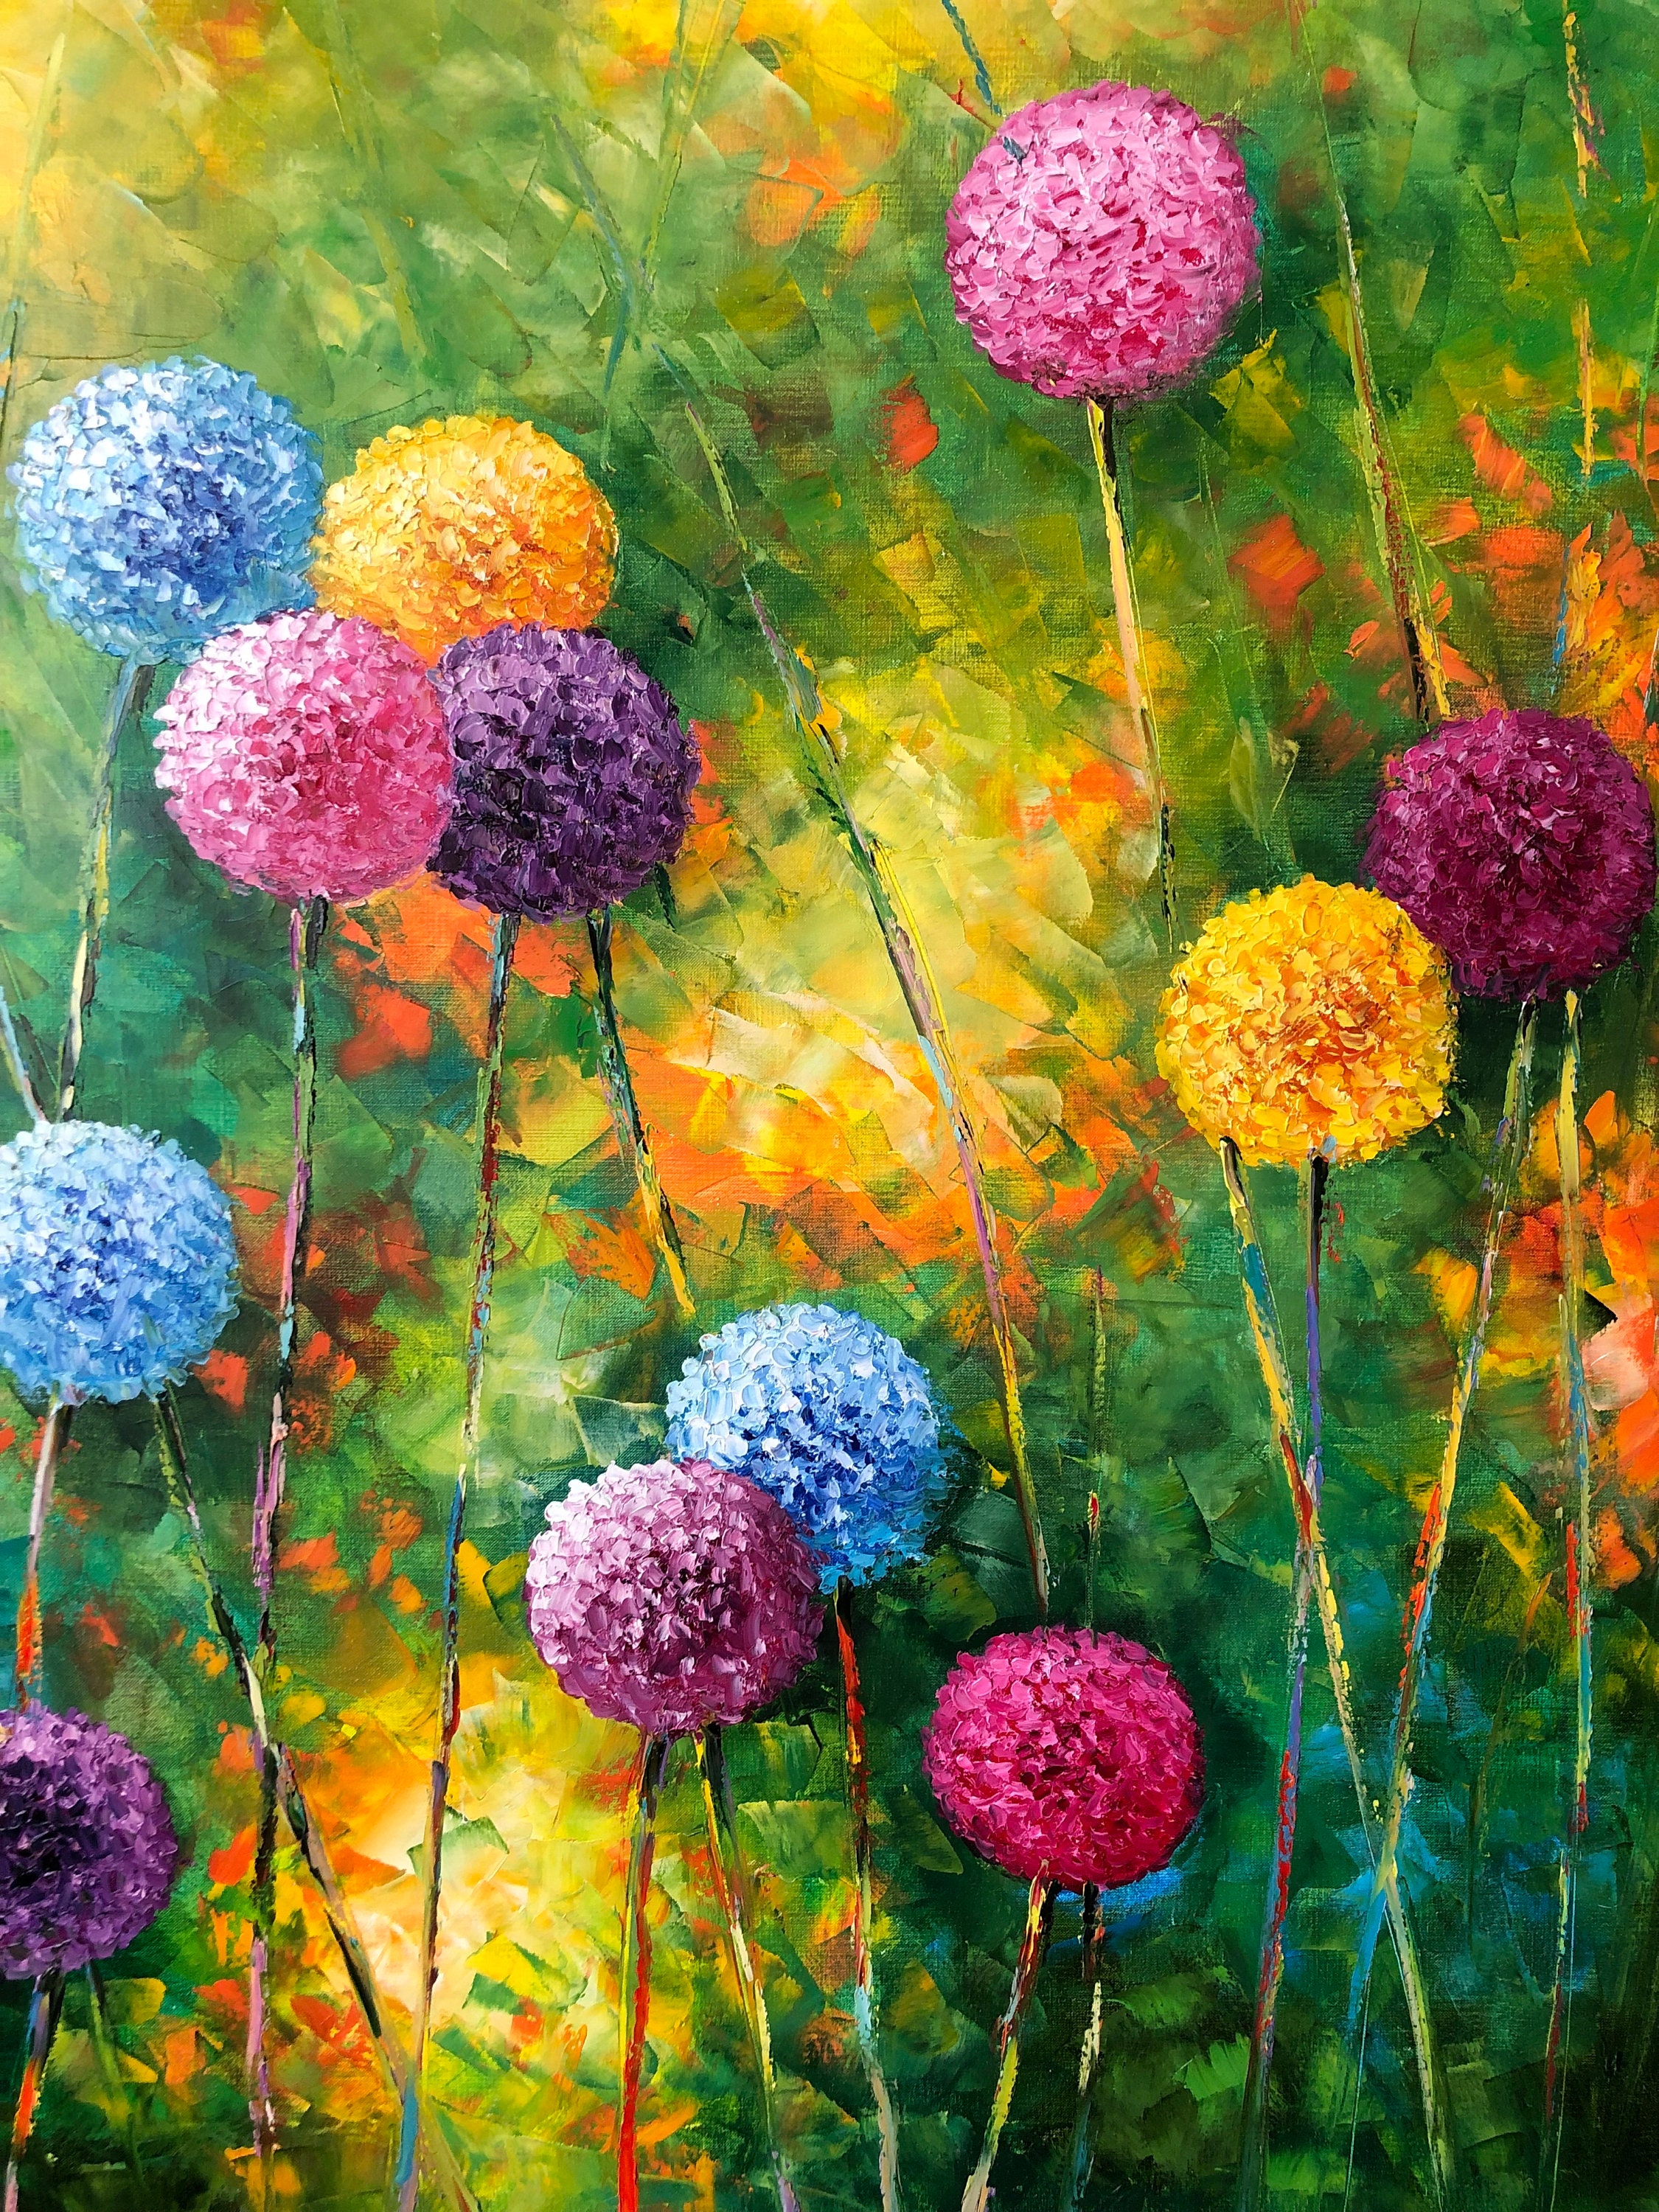 Acrylic dandelion painting of wildflowers small wall decor